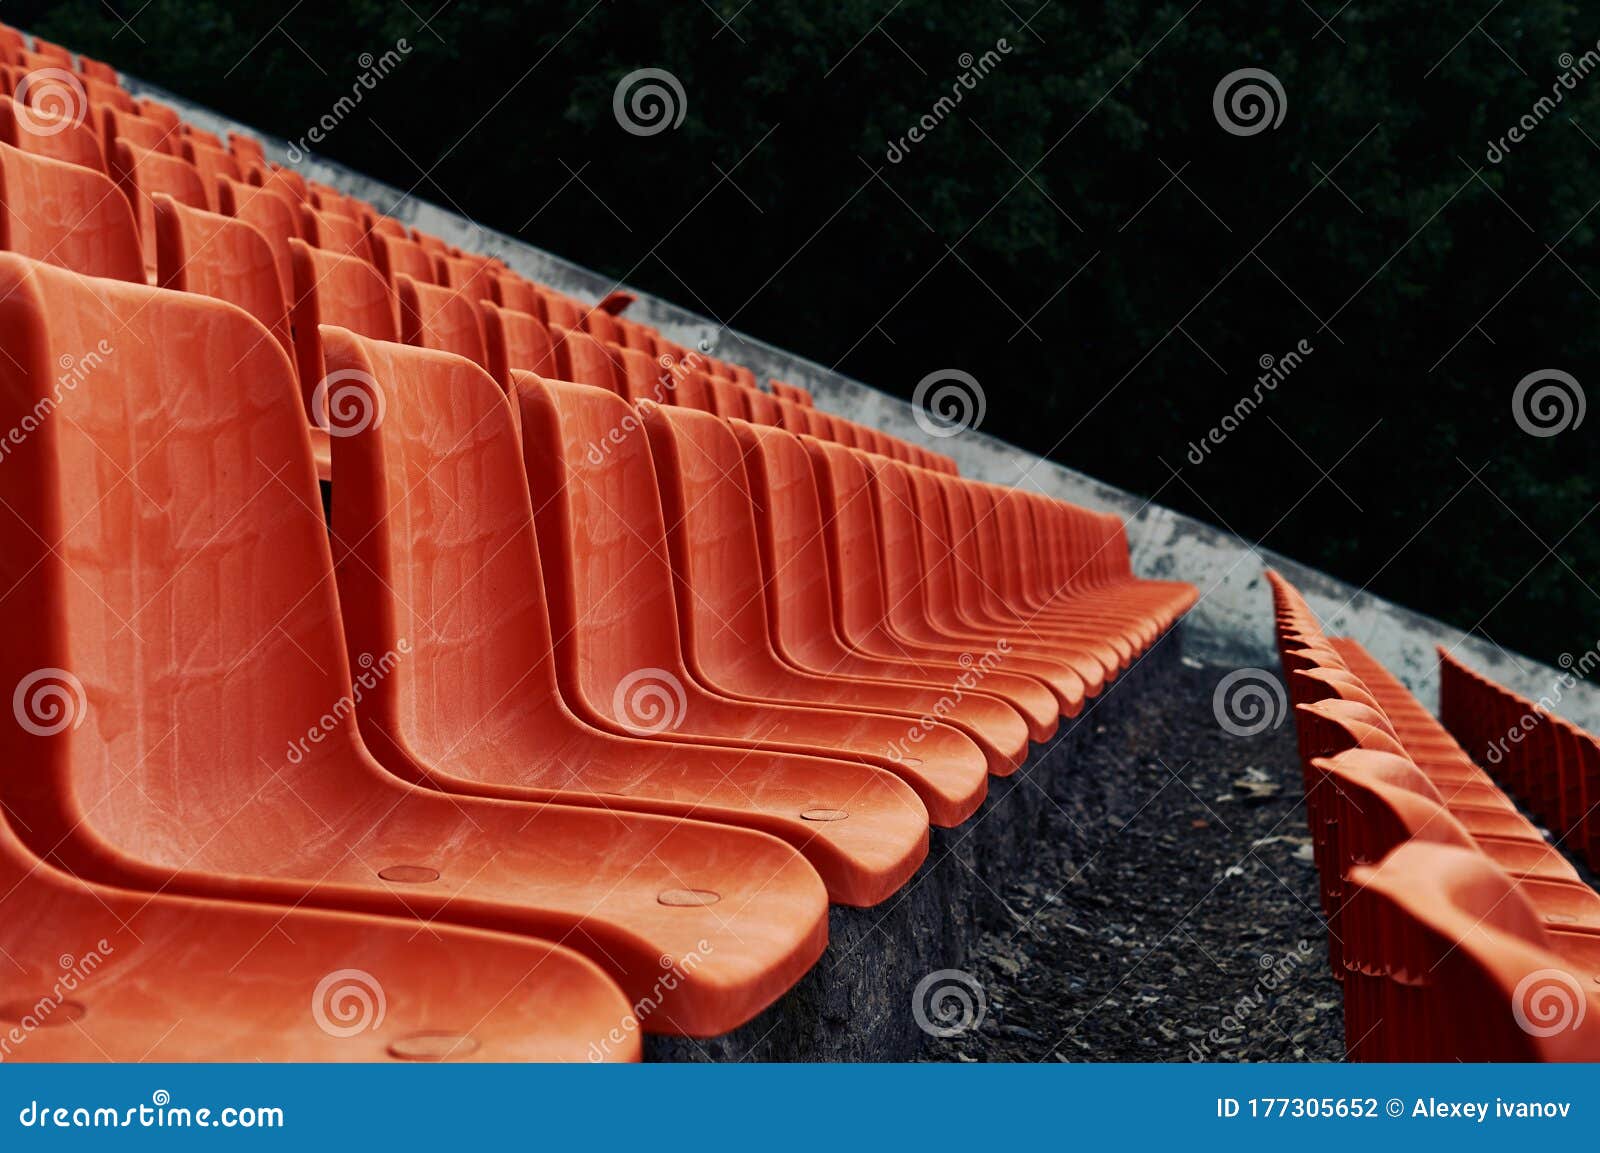 Stadium Seats in Perspective Stock Photo - Image of green, helios ...